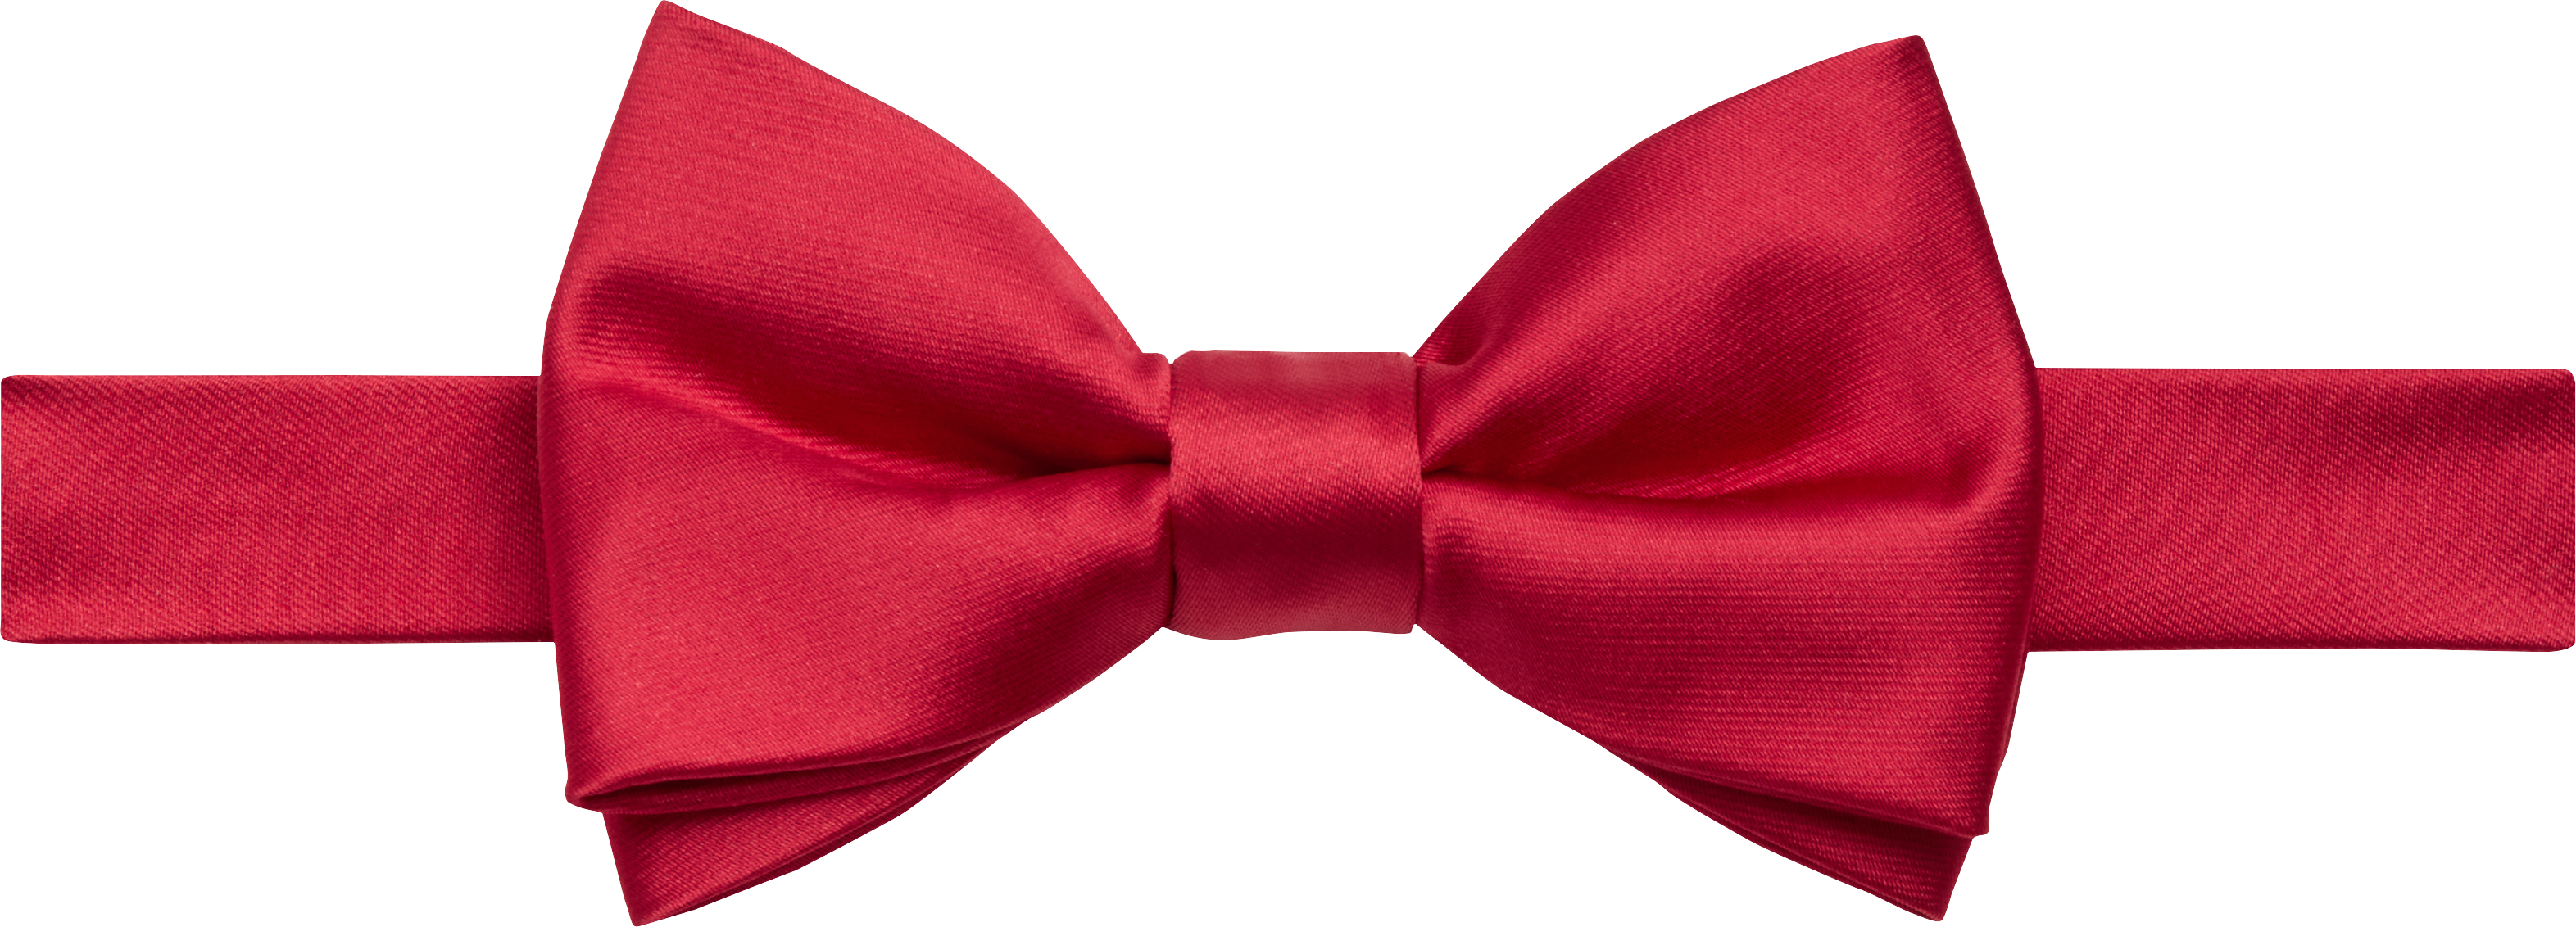 Egara Pre-Tied Formal Bow Tie, Red - Men's Featured | Men's Wearhouse